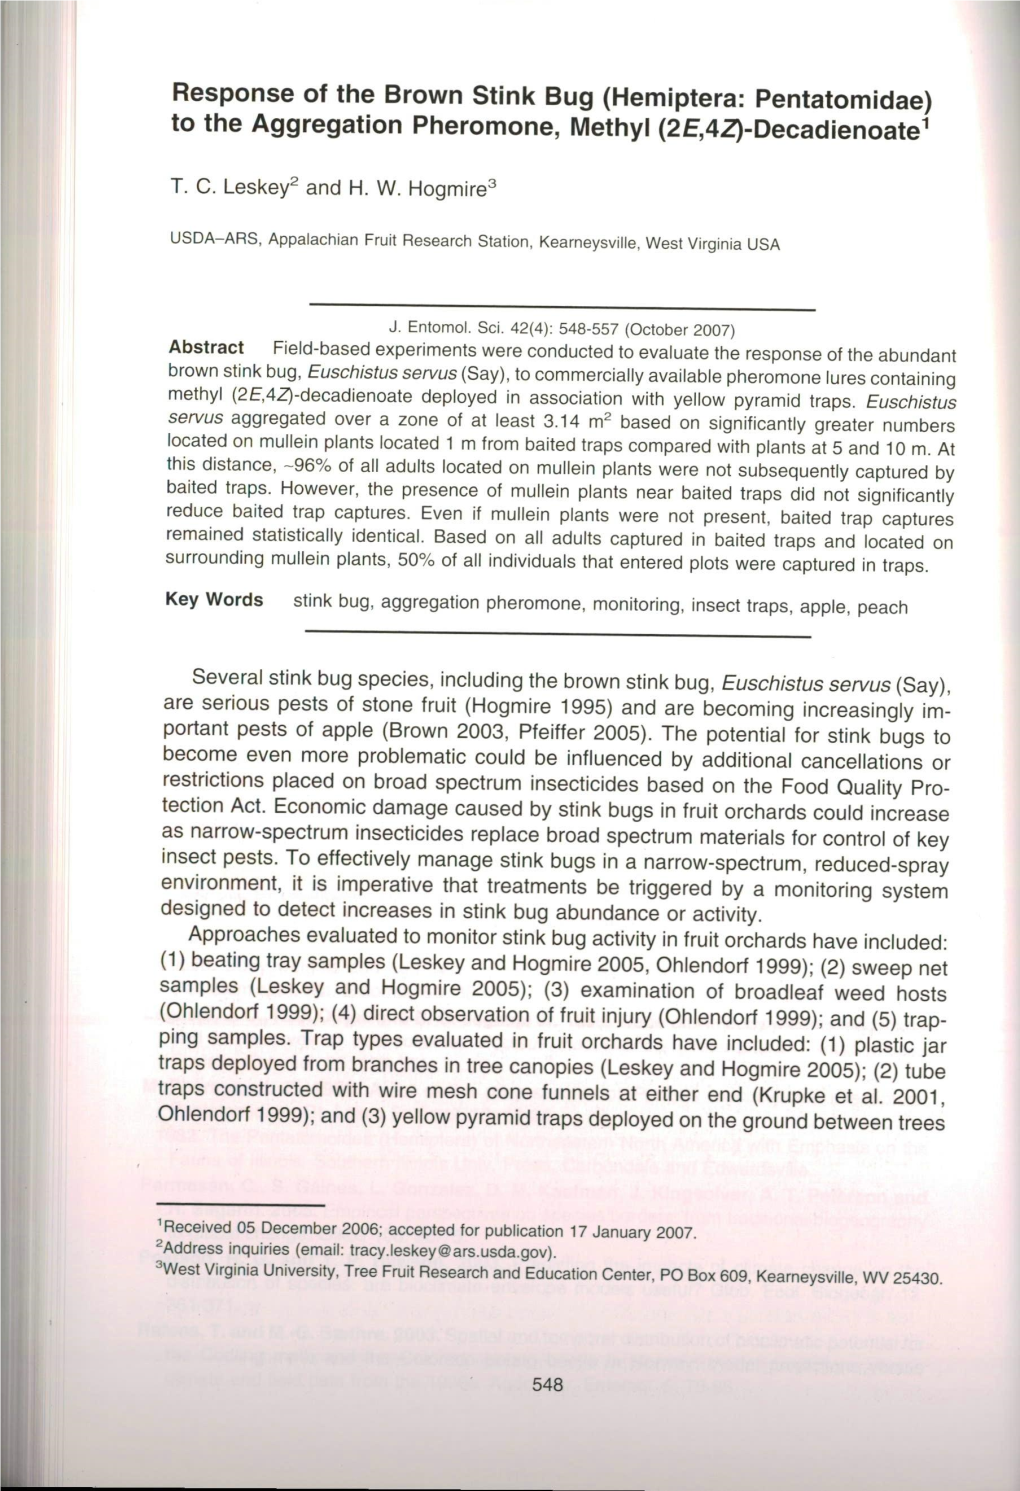 Response of the Brown Stink Bug (Hemiptera: Pentatomidae) to the Aggregation Pheromone, Methyl (2E,42)-Decadienoate1